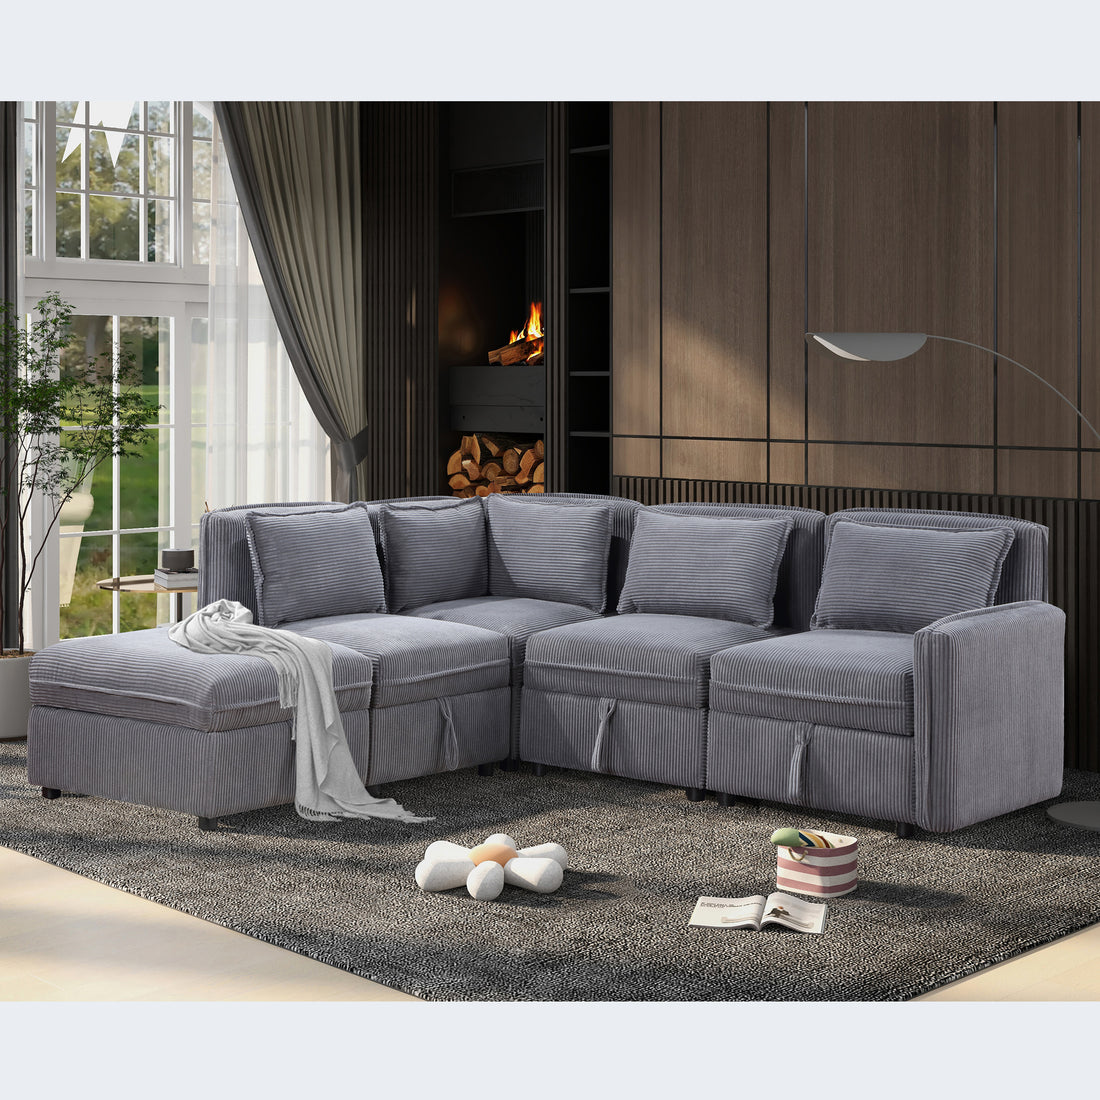 Modular Sofa set with storage dark gray-wood-corduroy-5 seat